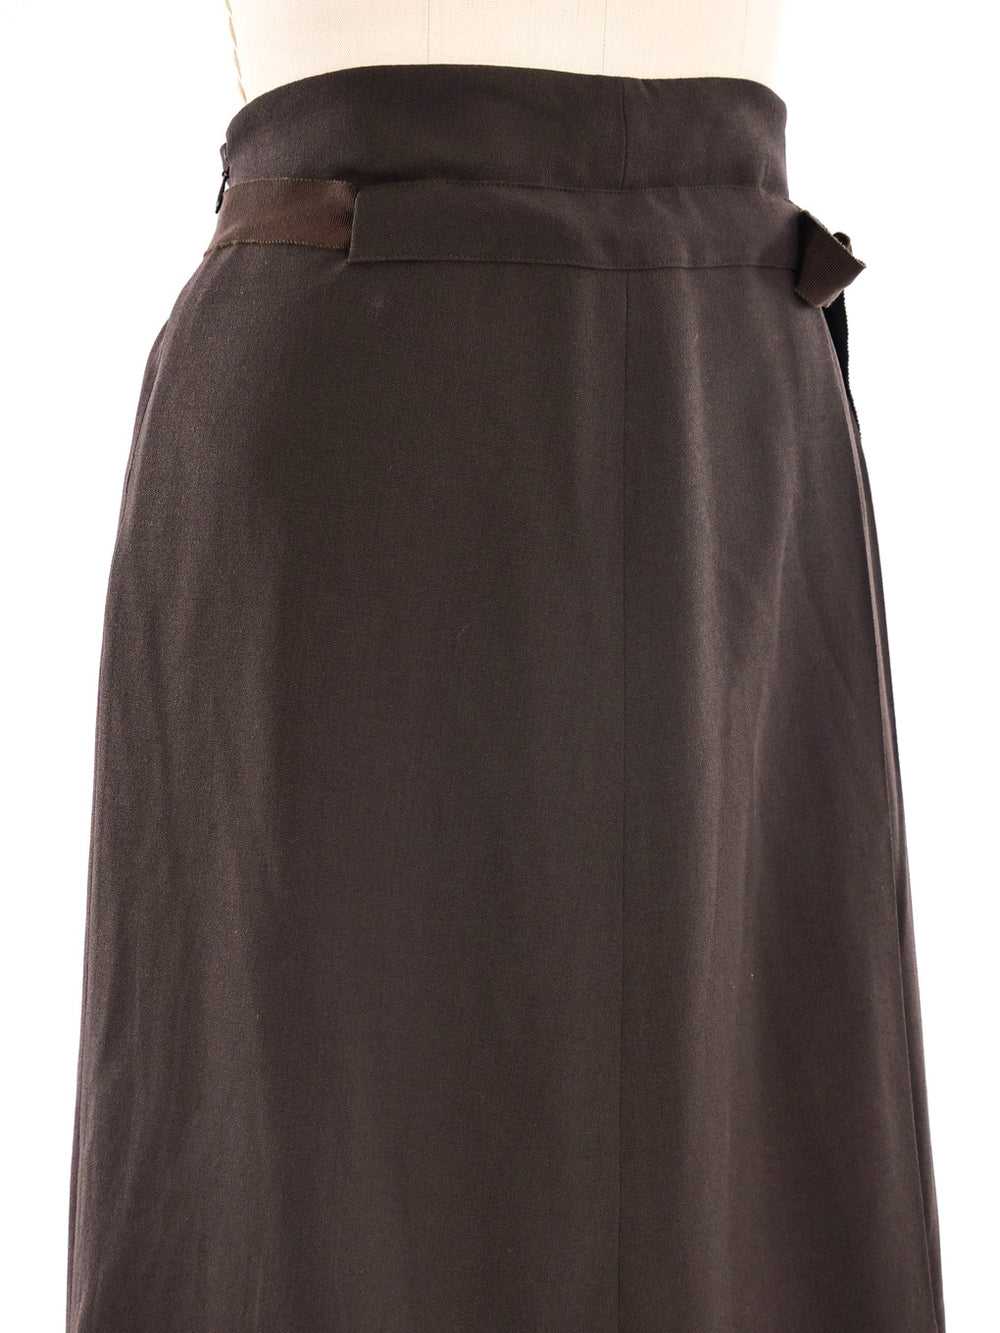 Salvatore Ferragamo Chocolate Wool Pleated Skirt - image 4